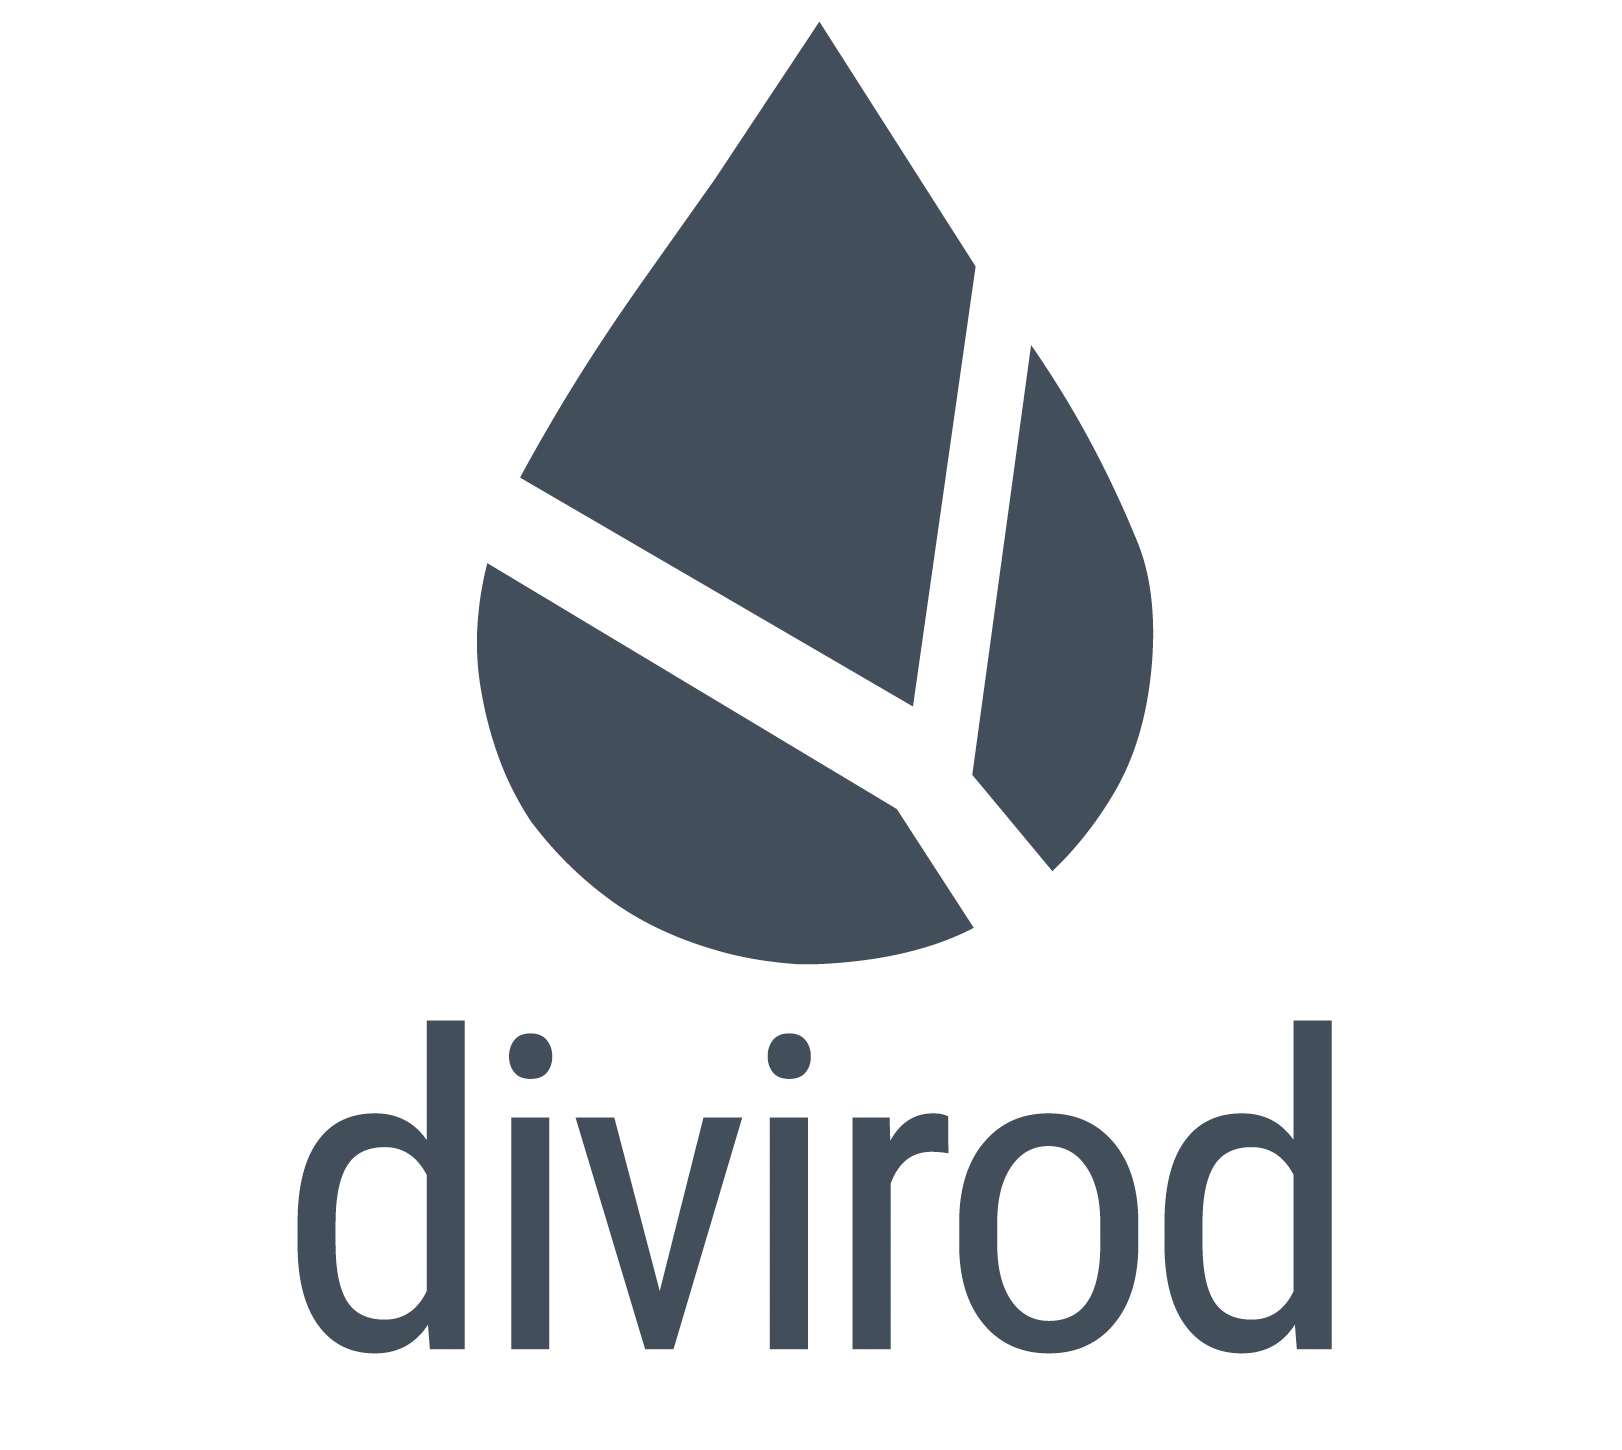 divirod Inc.